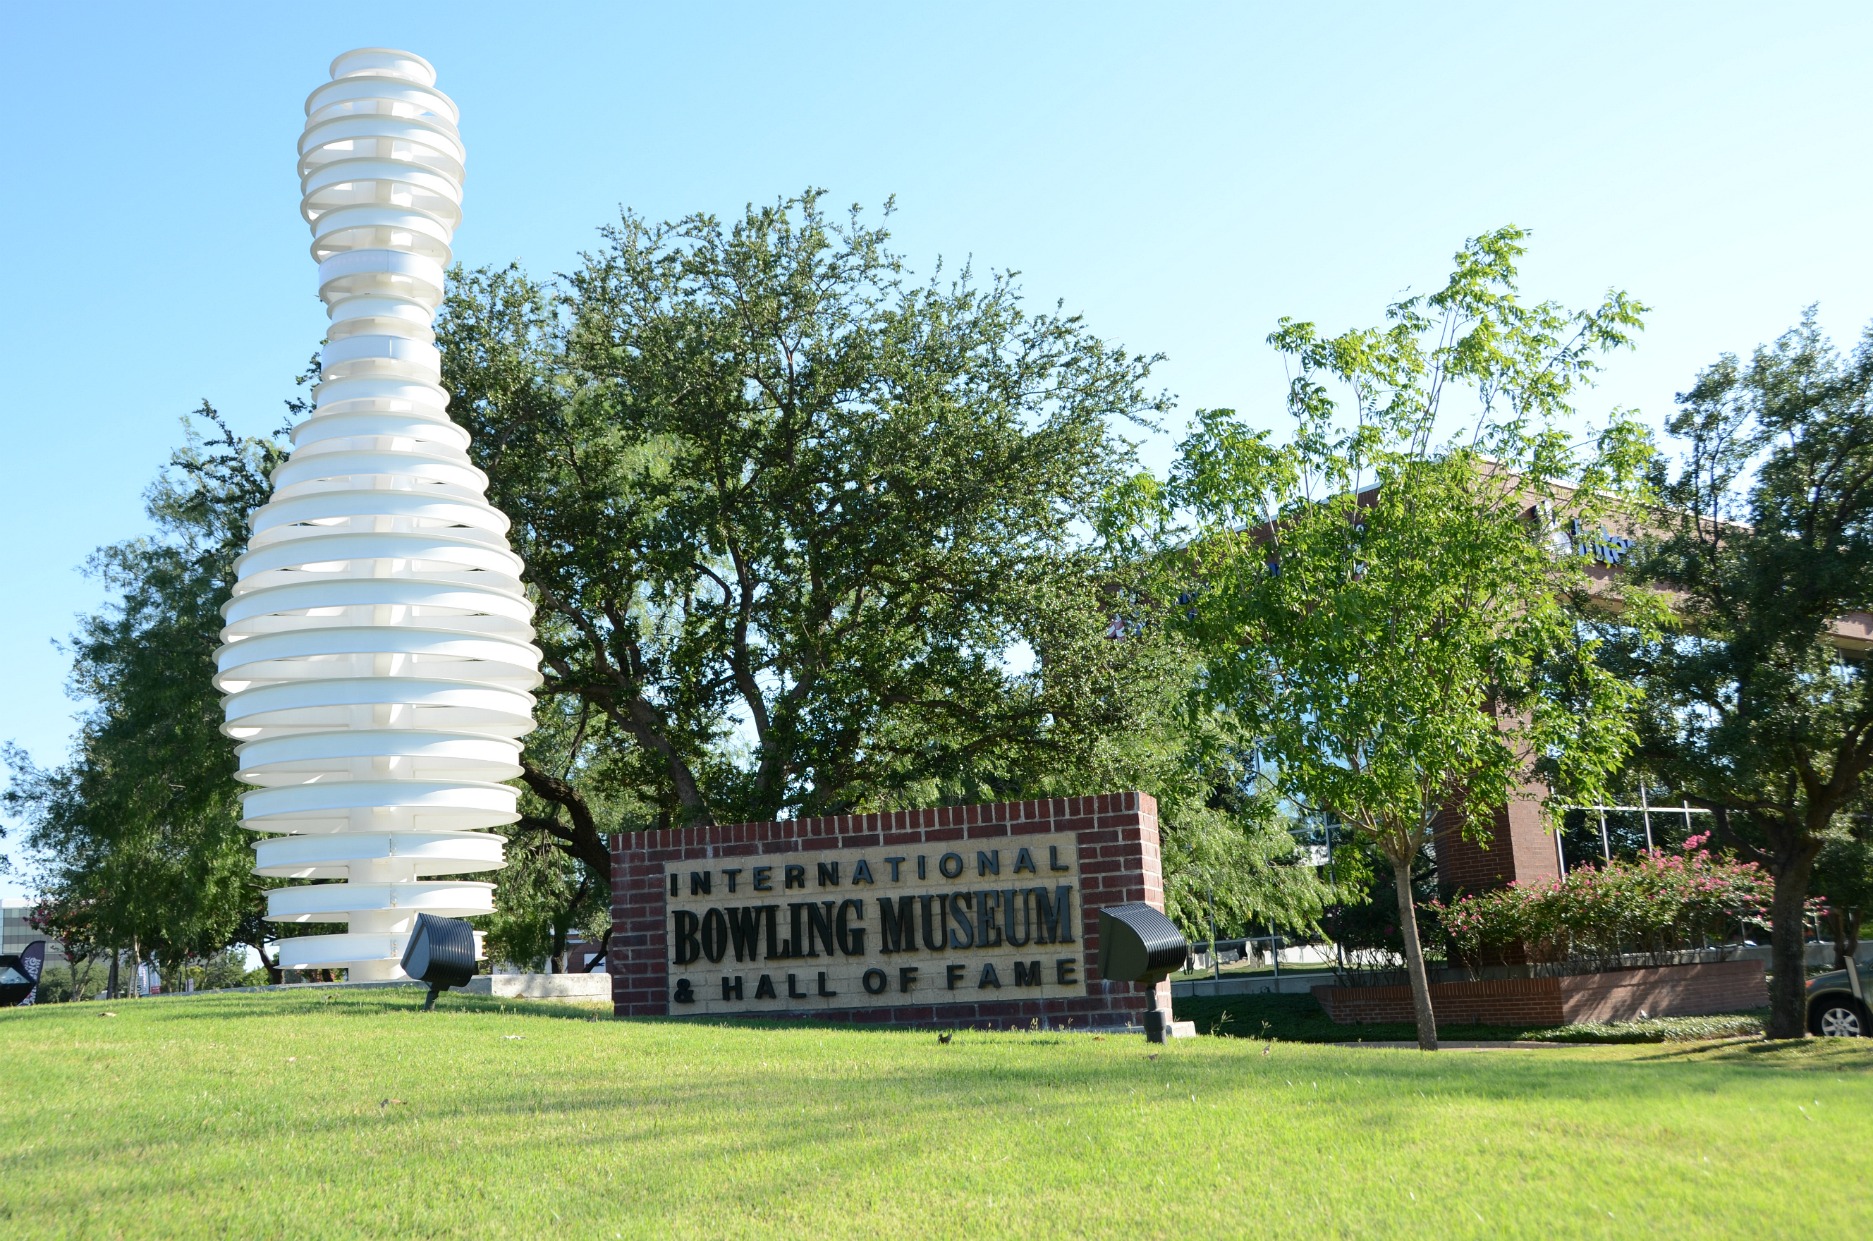 Bowling Museum, Arlington, Texas